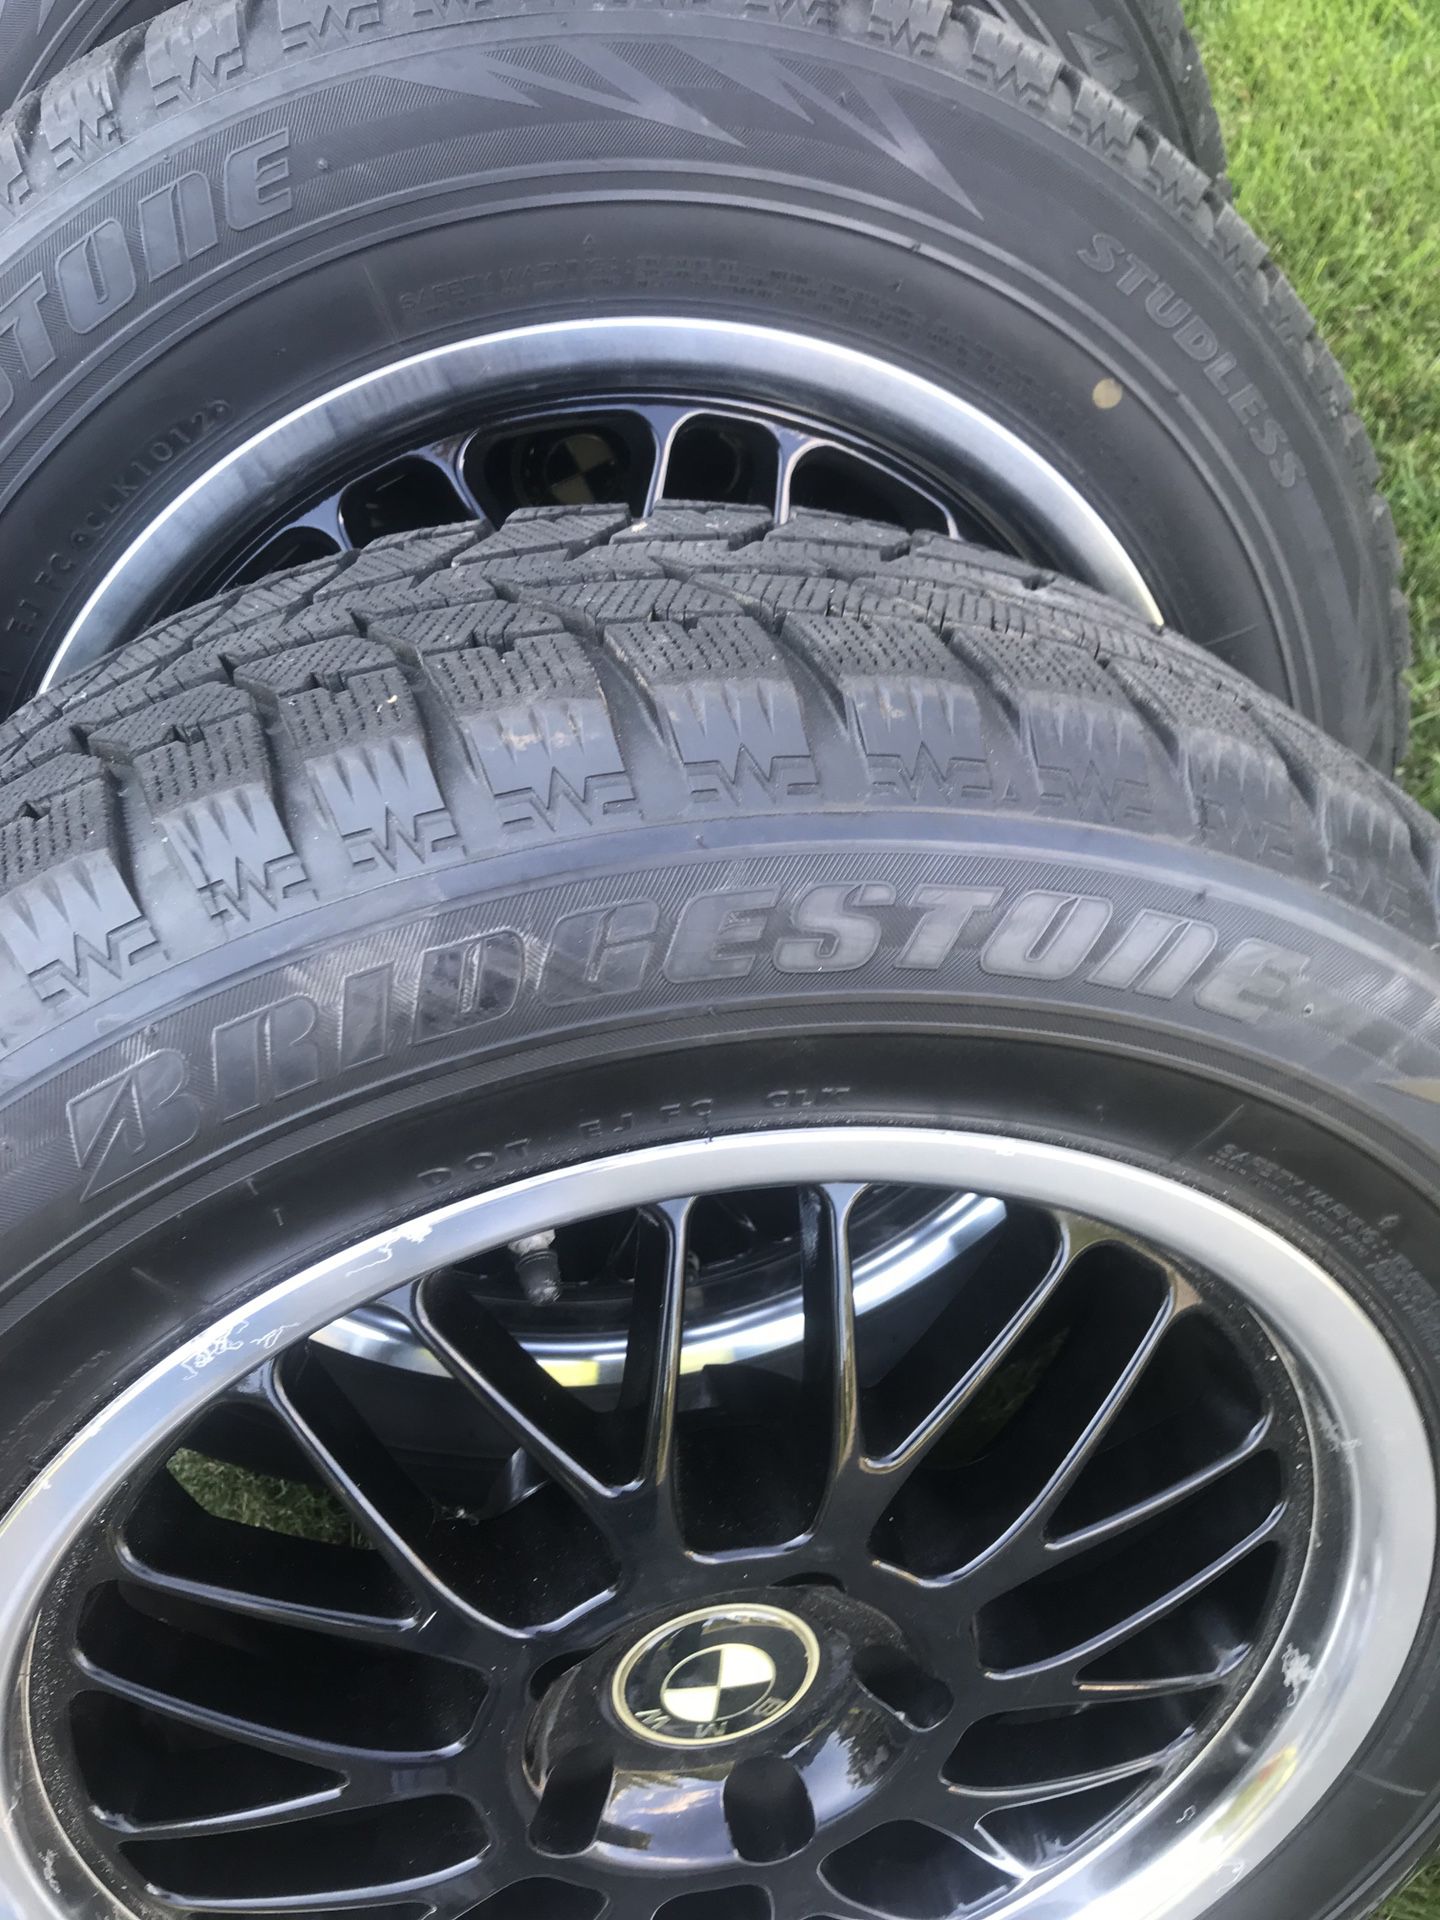 Bridgestone winter tires and BMW wheels and rims